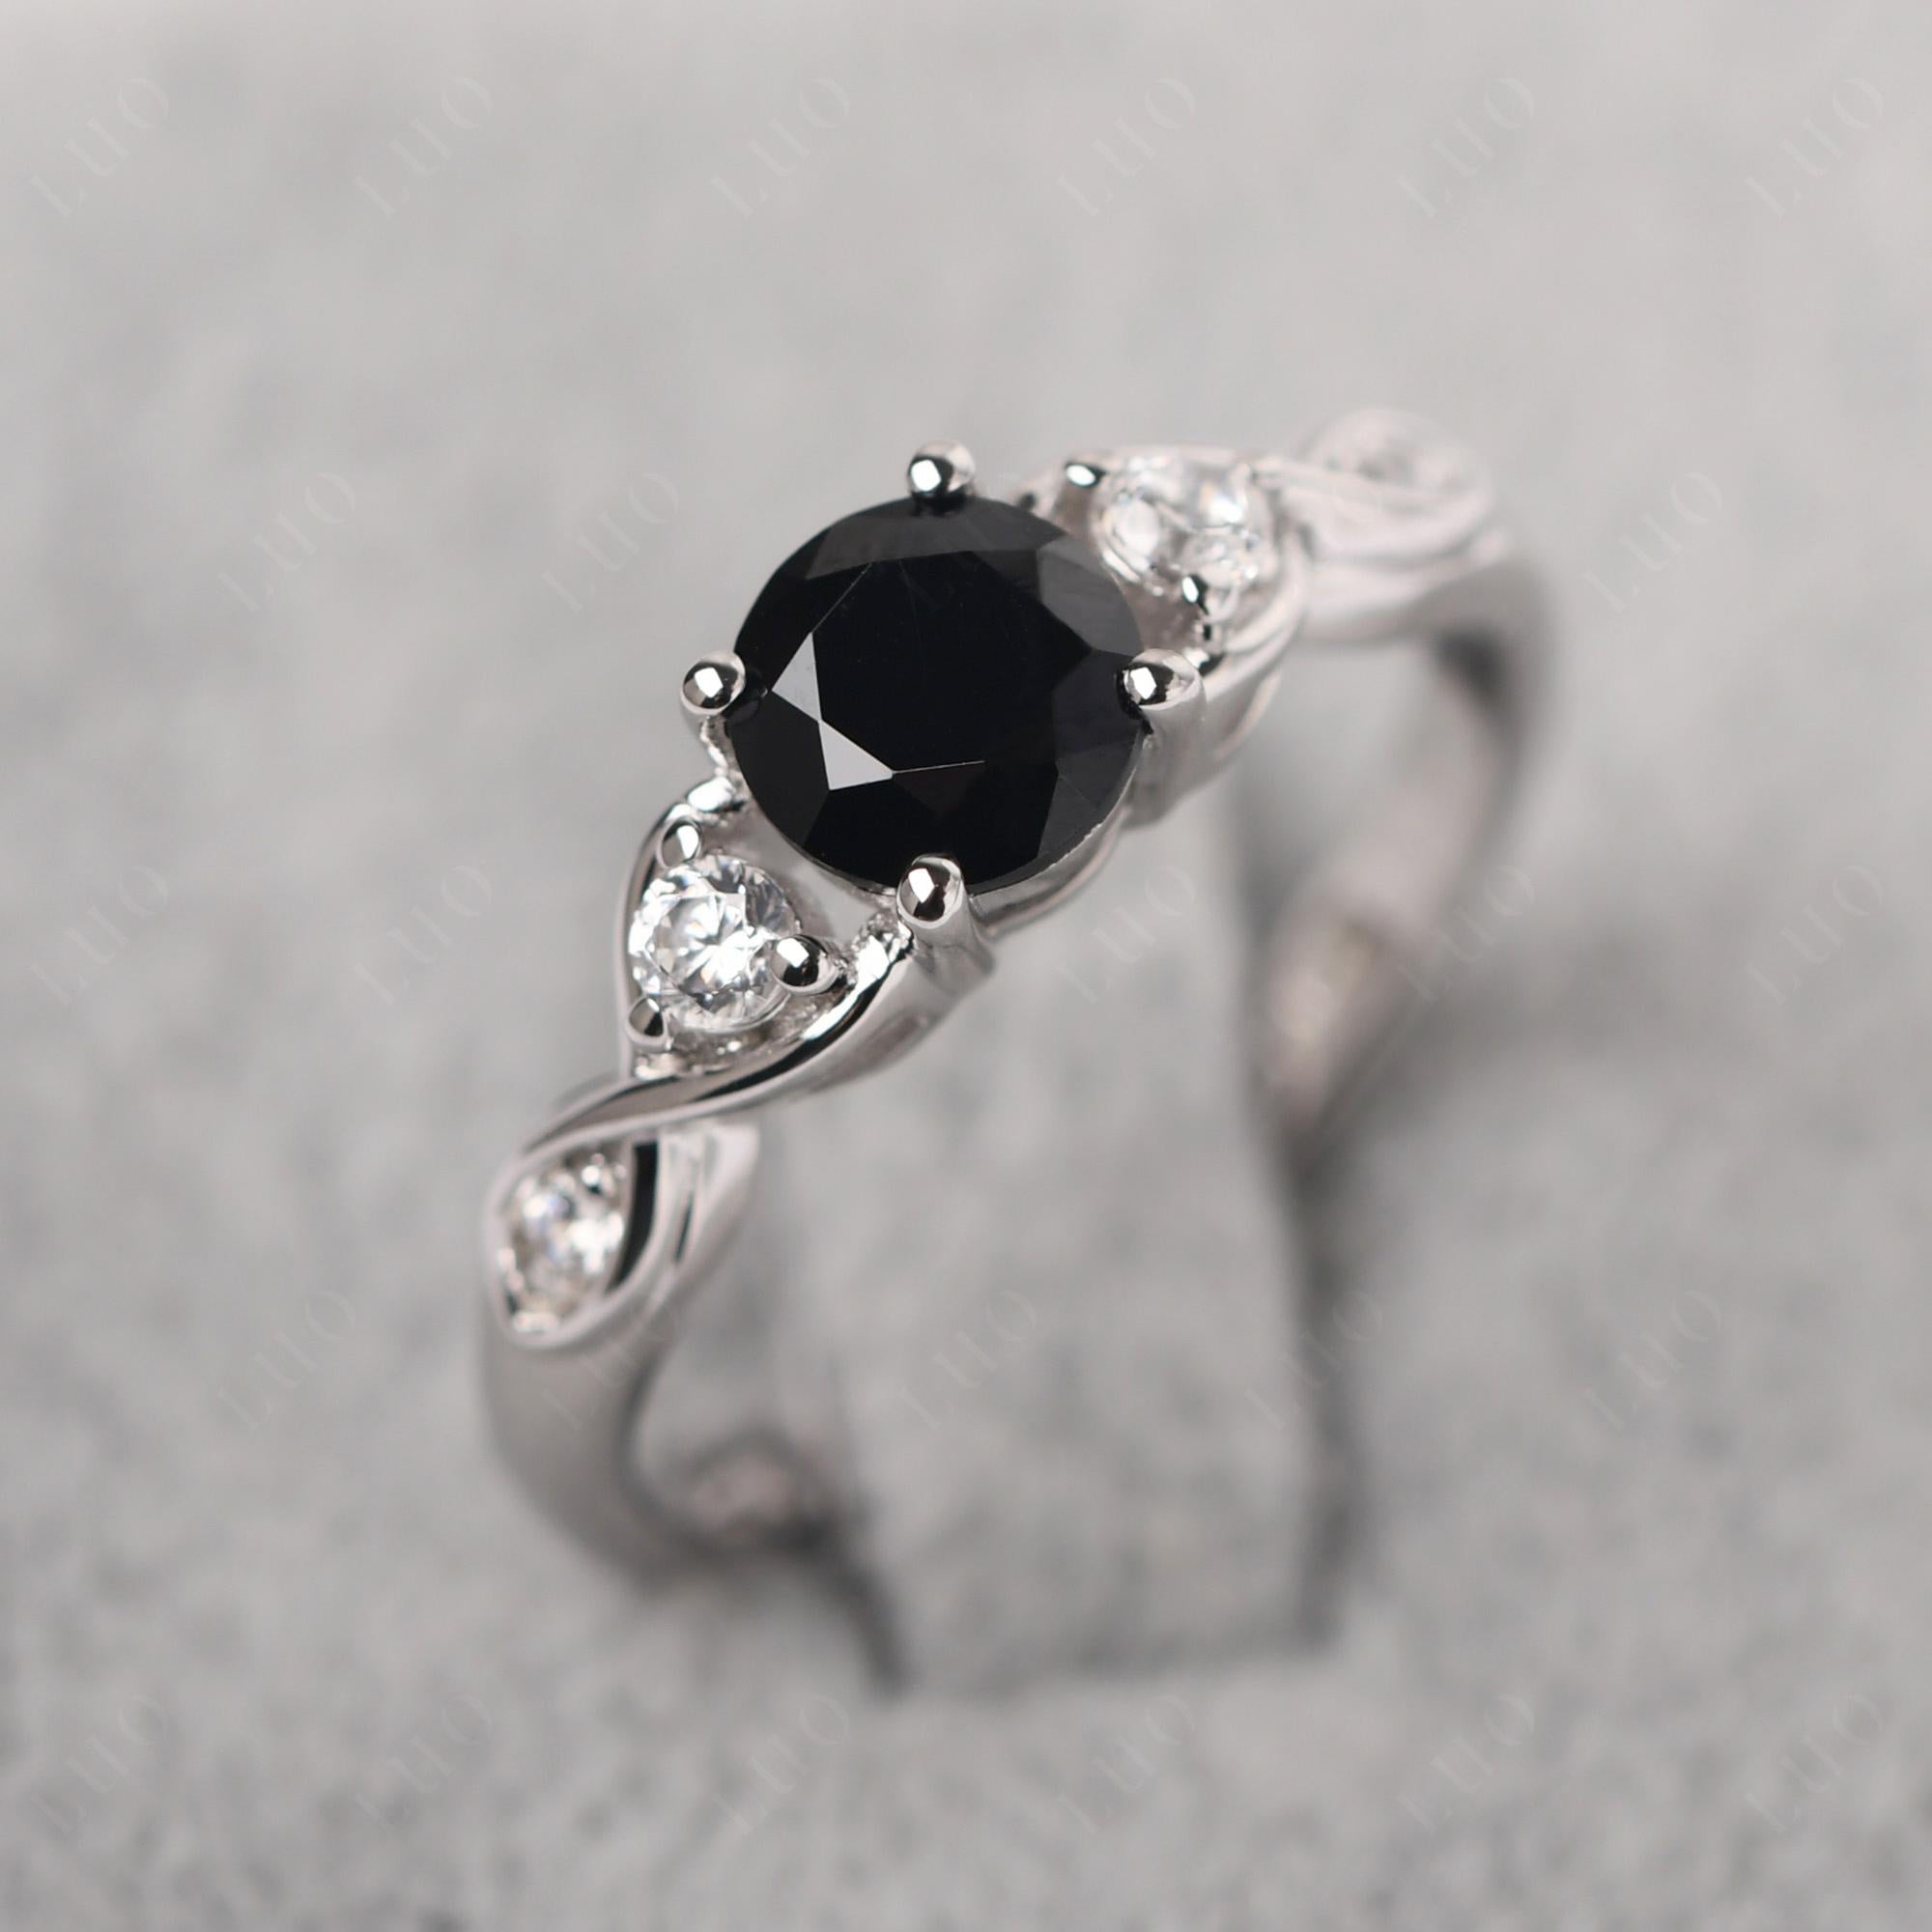 Round Black Stone Ring Wedding Ring - LUO Jewelry